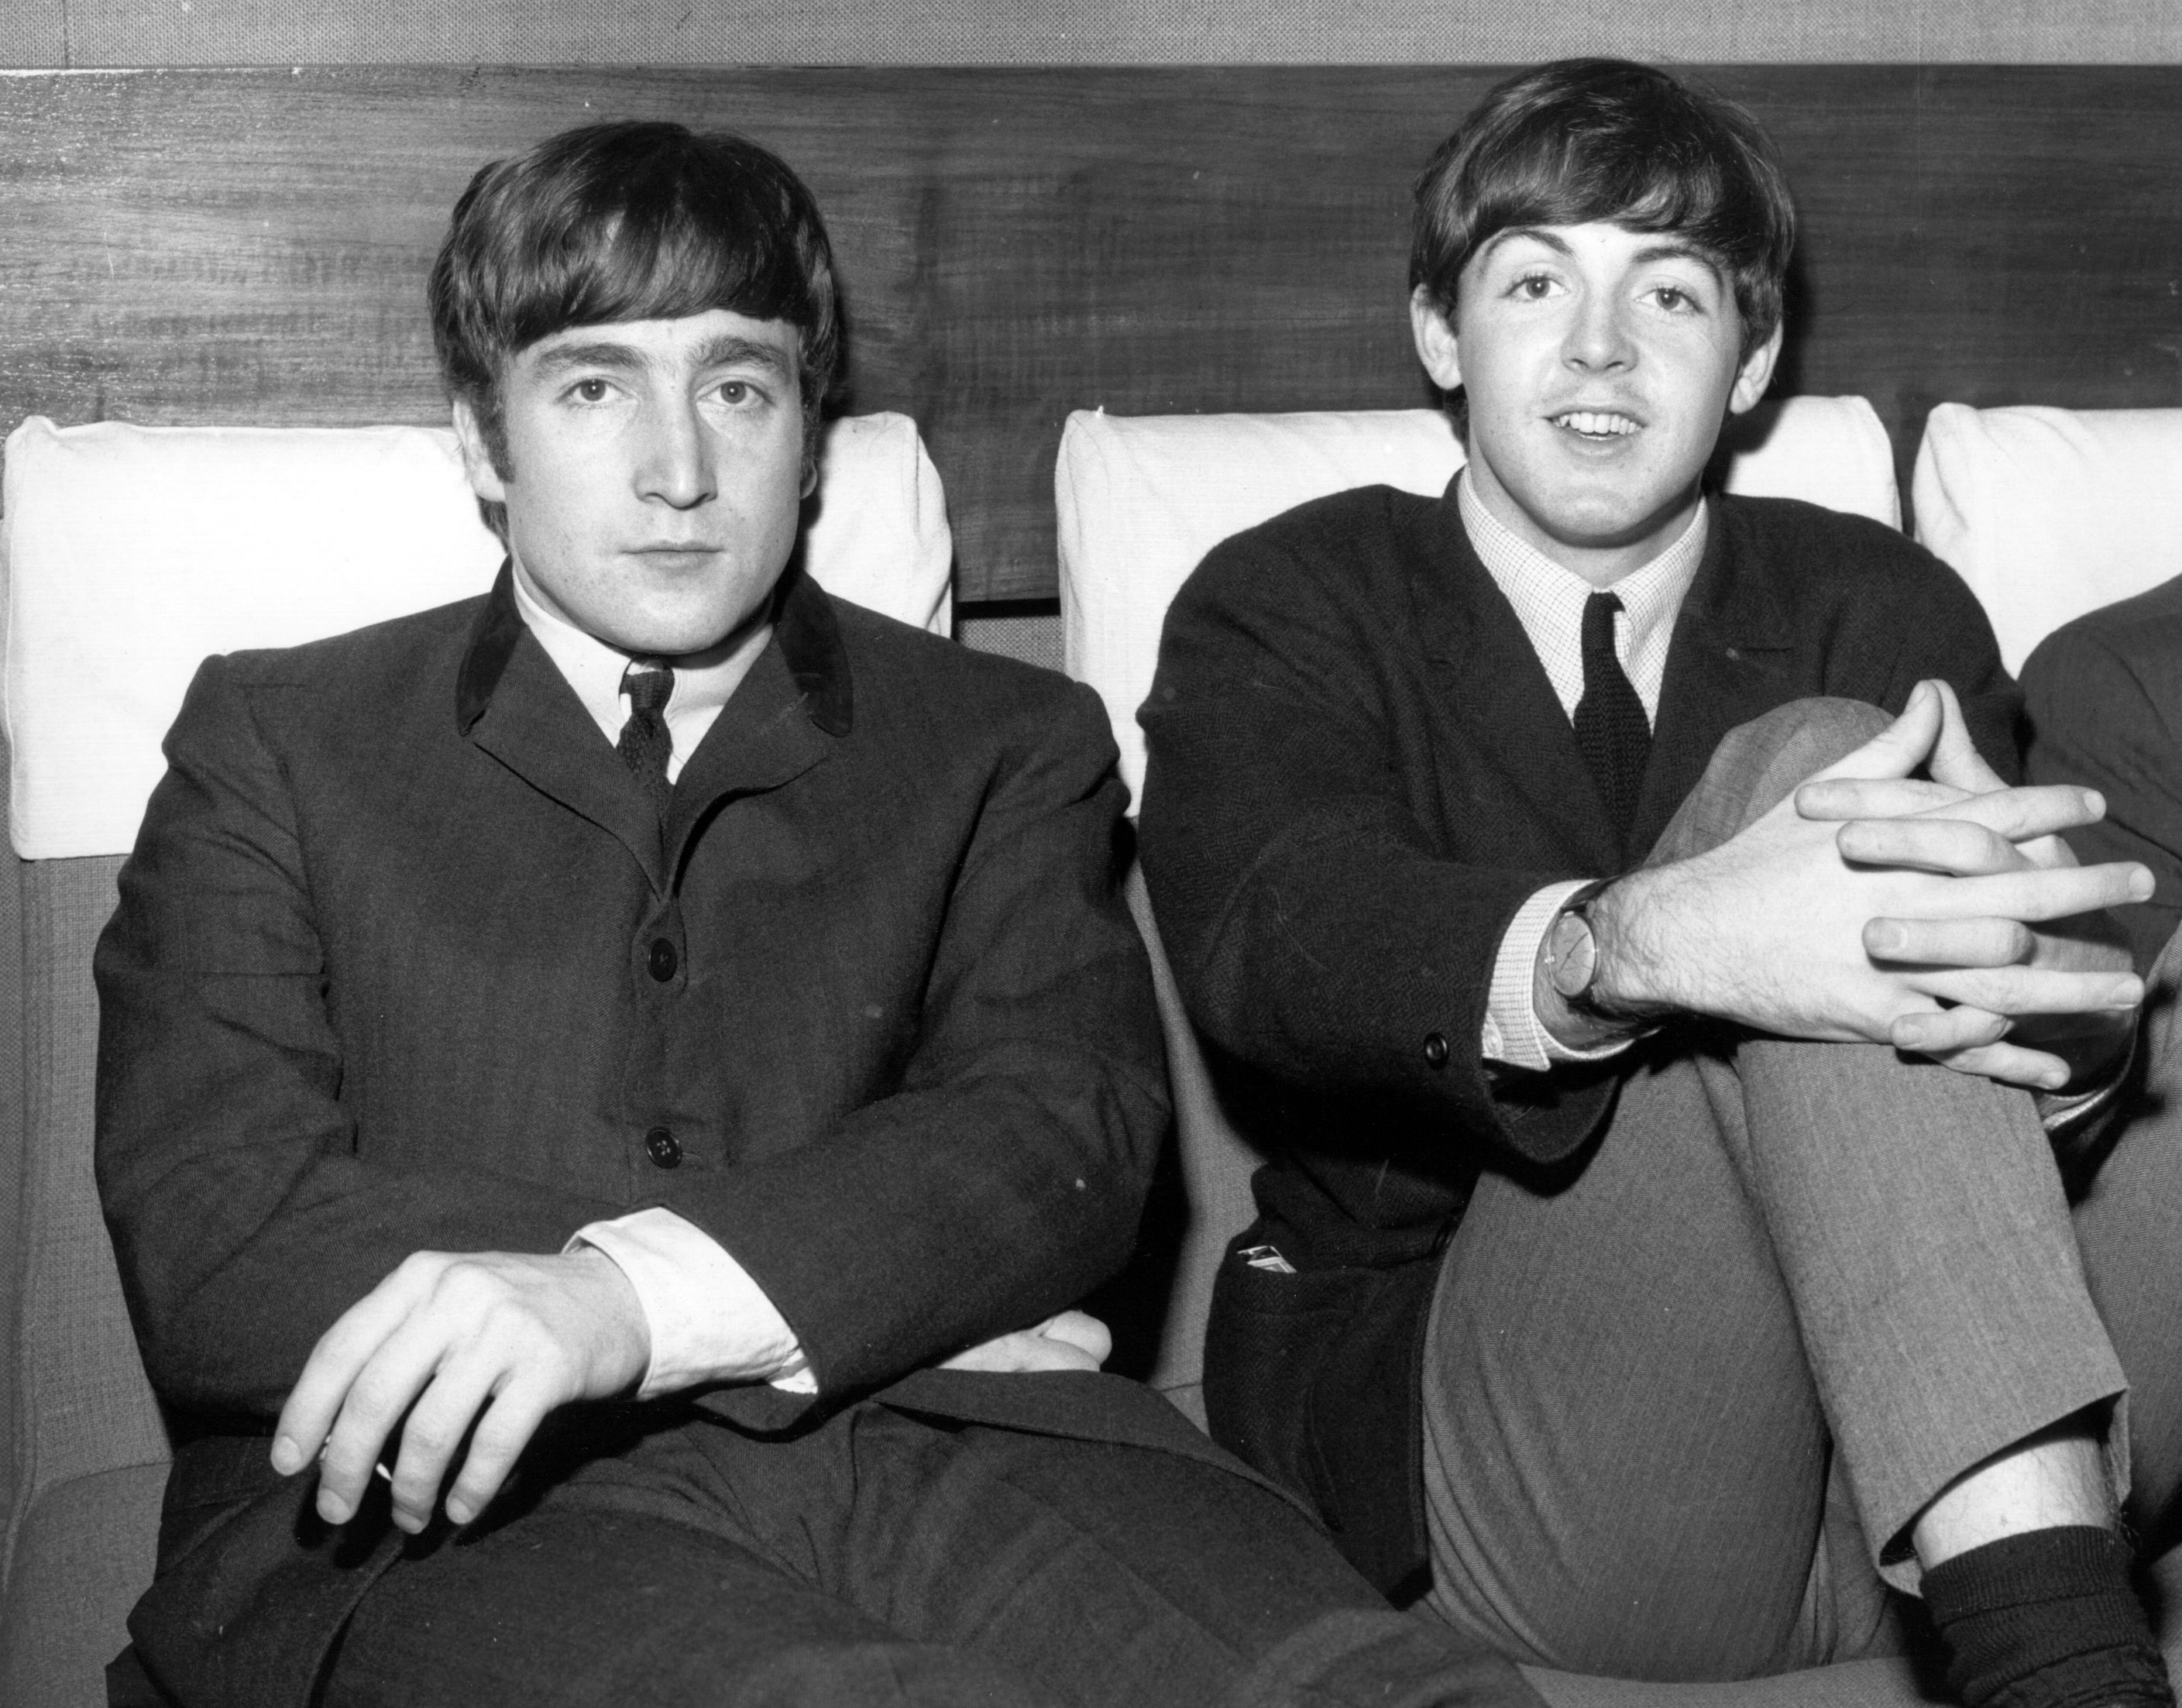 John Lennon and Paul McCartney in suits